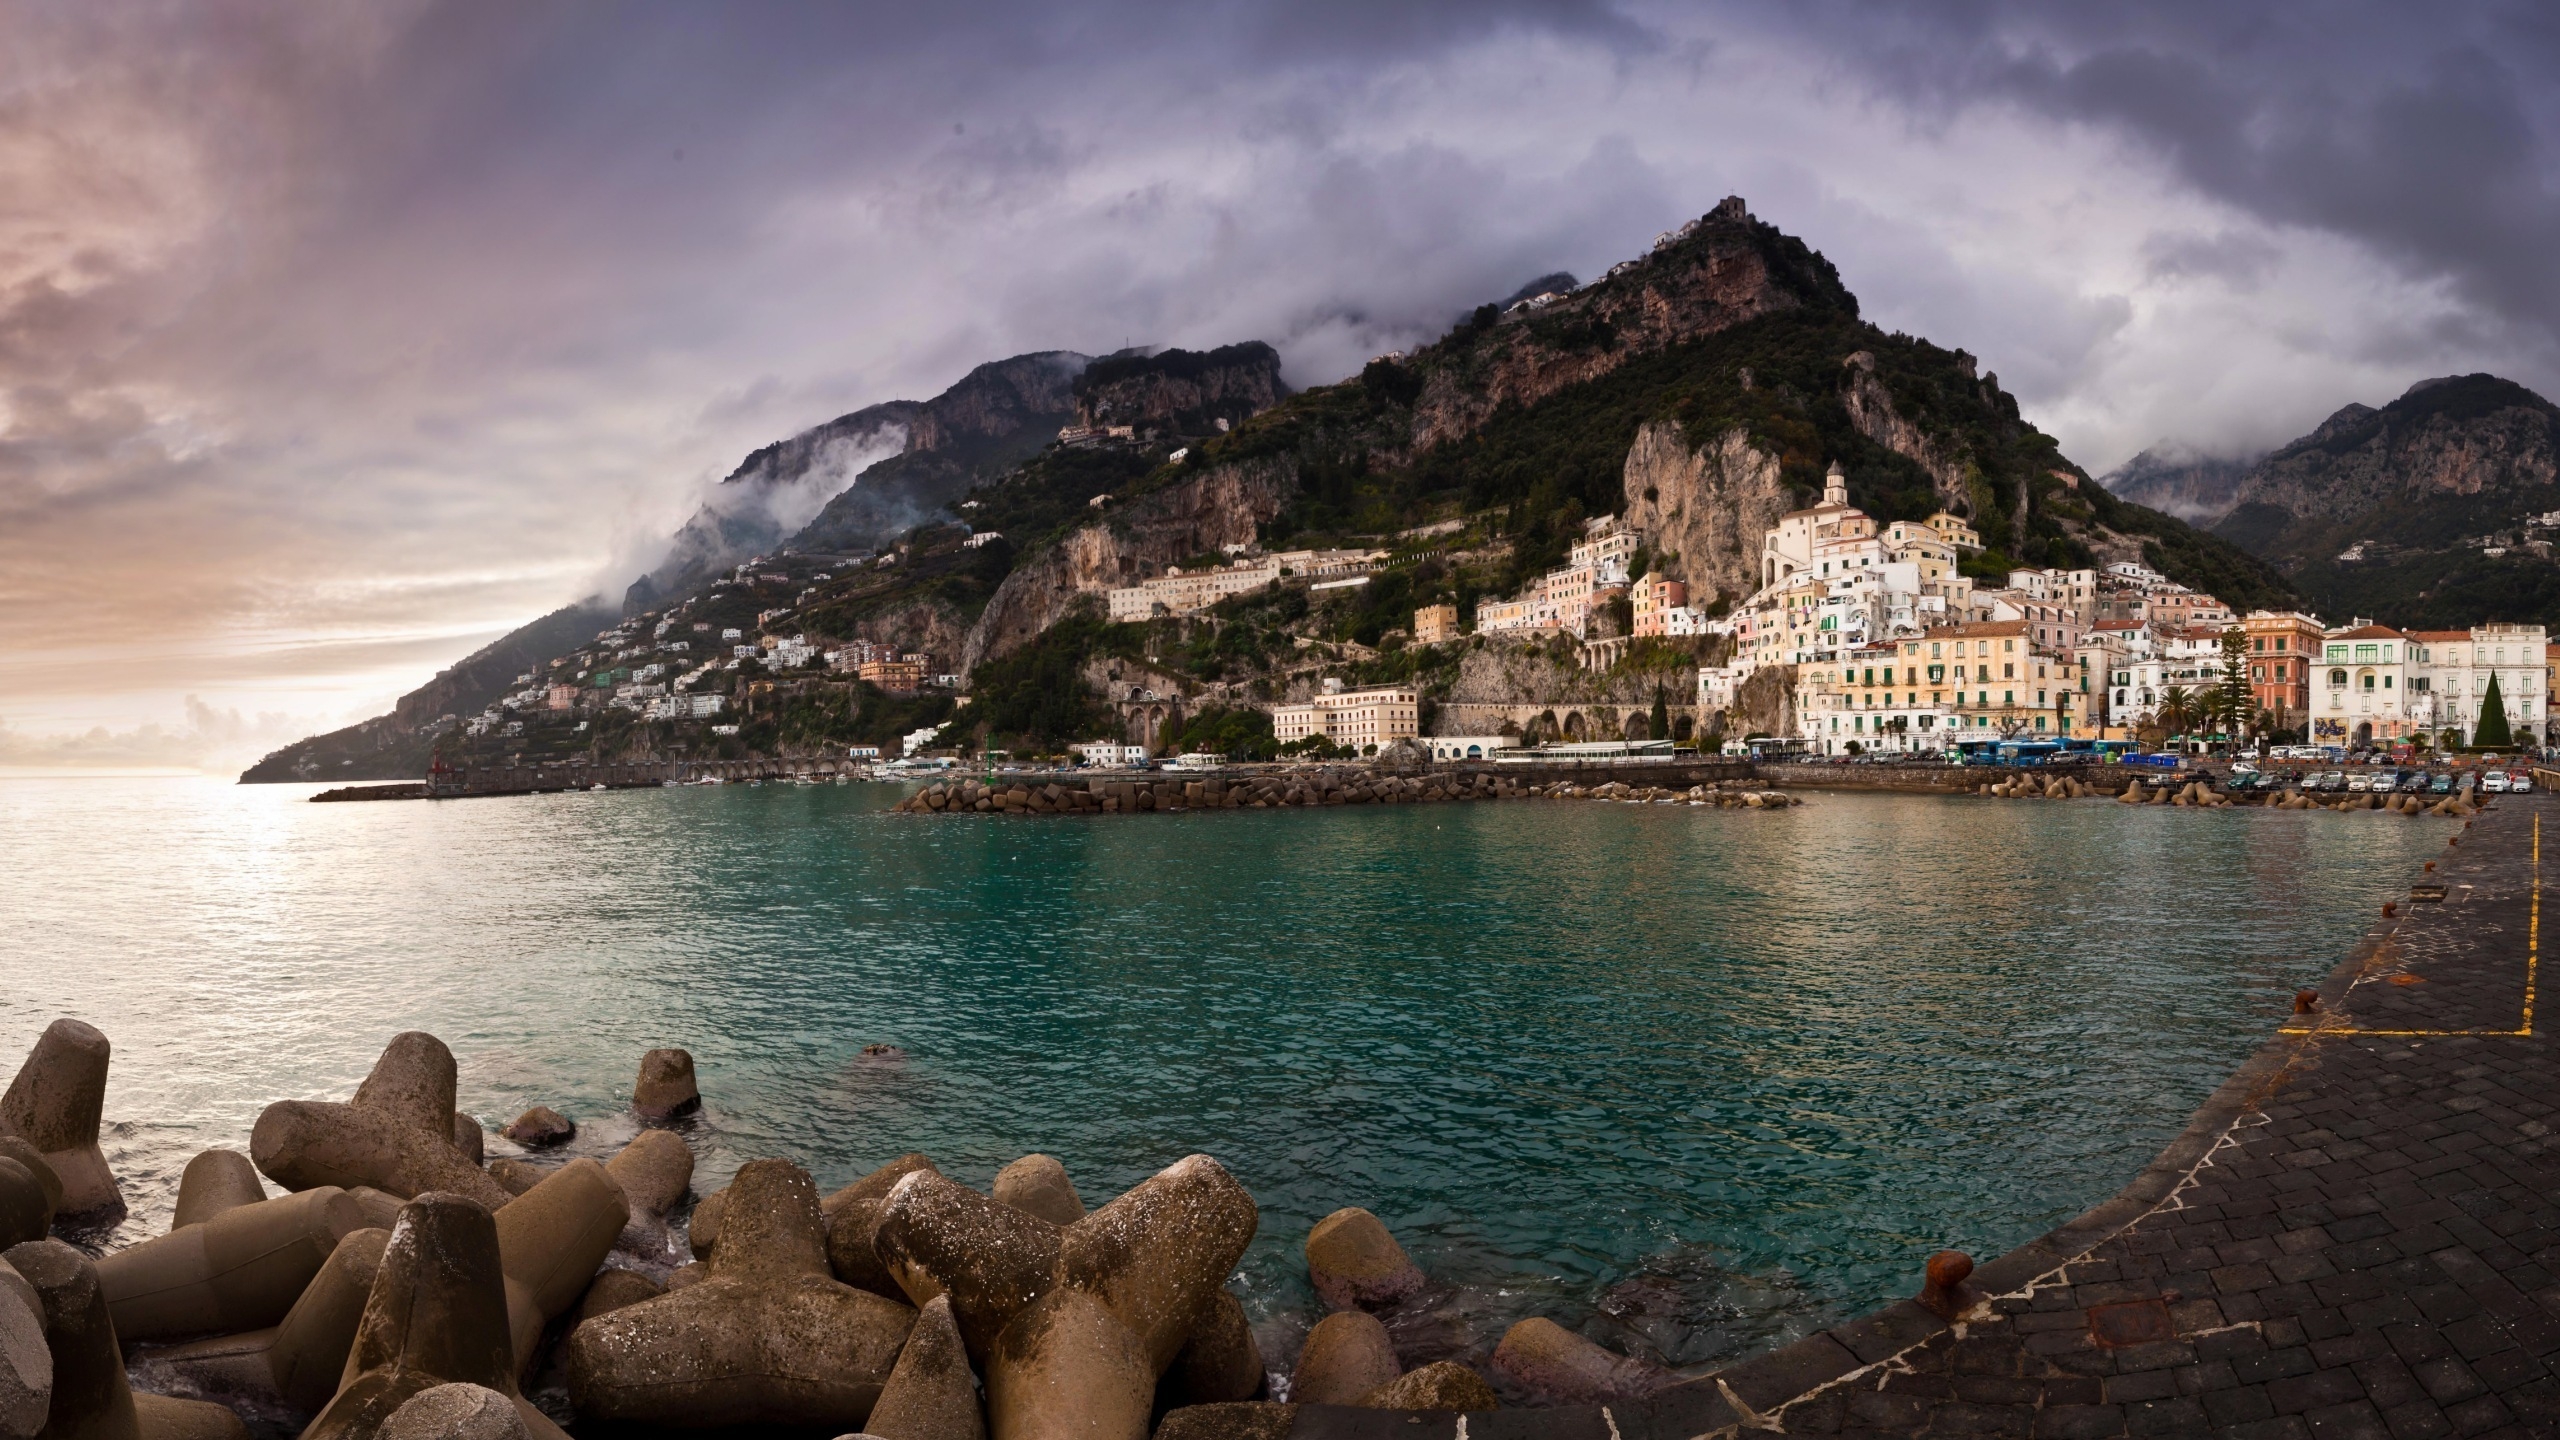 Amalfi Coast Italy for 2560x1440 HDTV resolution